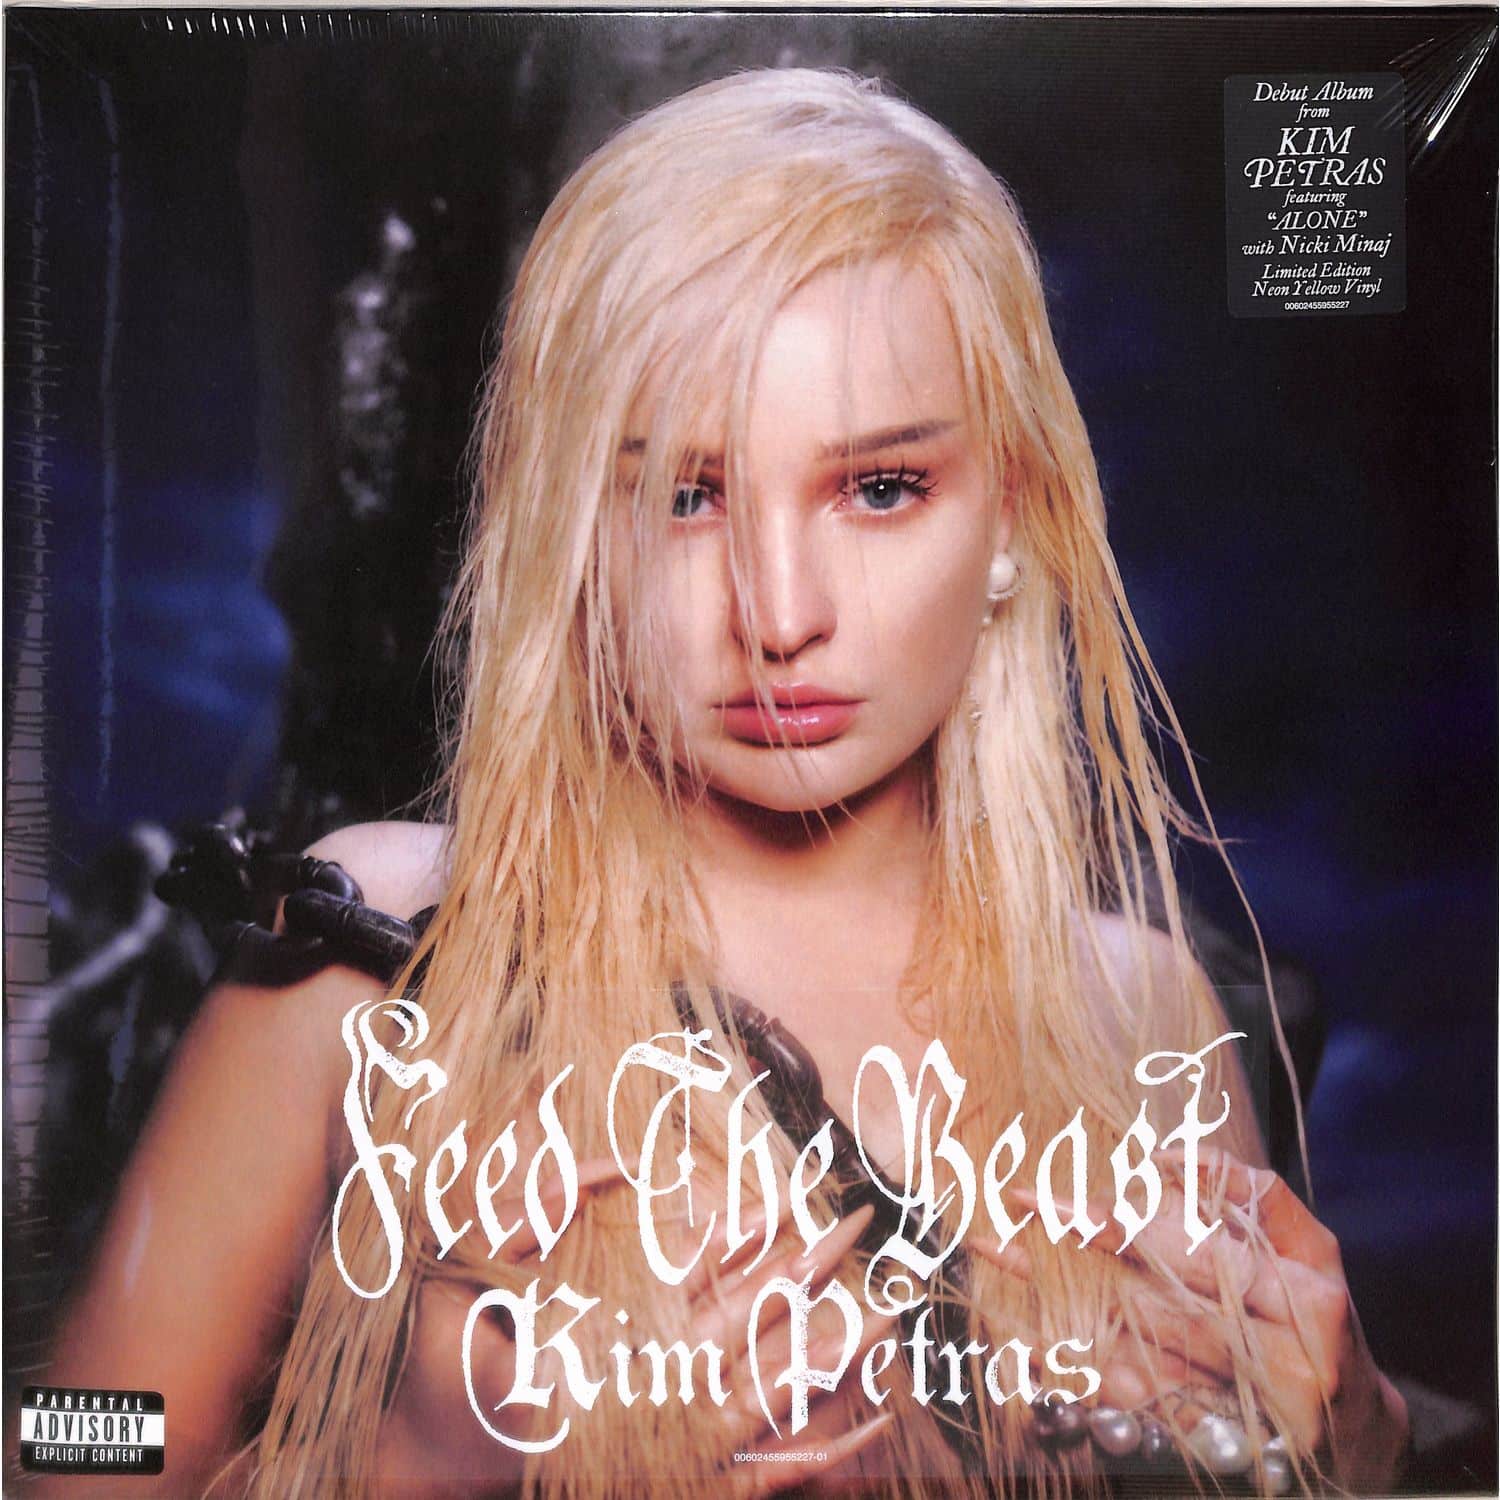 Kim Petras - FEED THE BEAST 